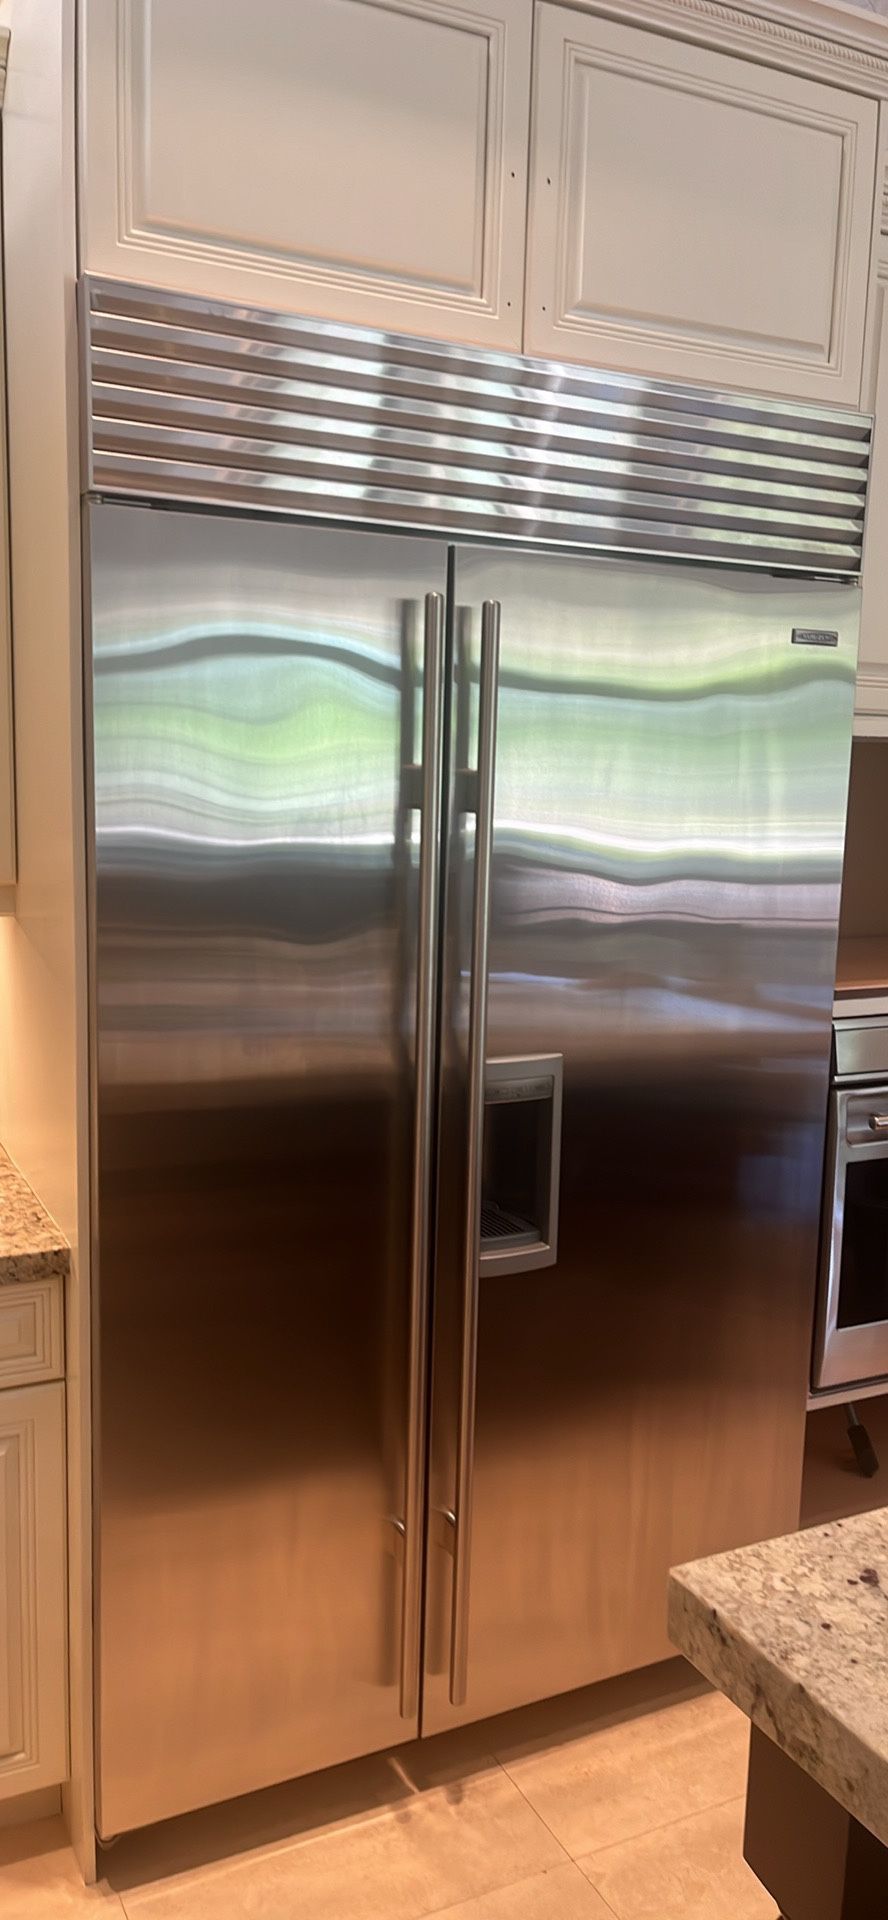 2010 SUB ZERO Refrigerator, Freezer & Ice Maker